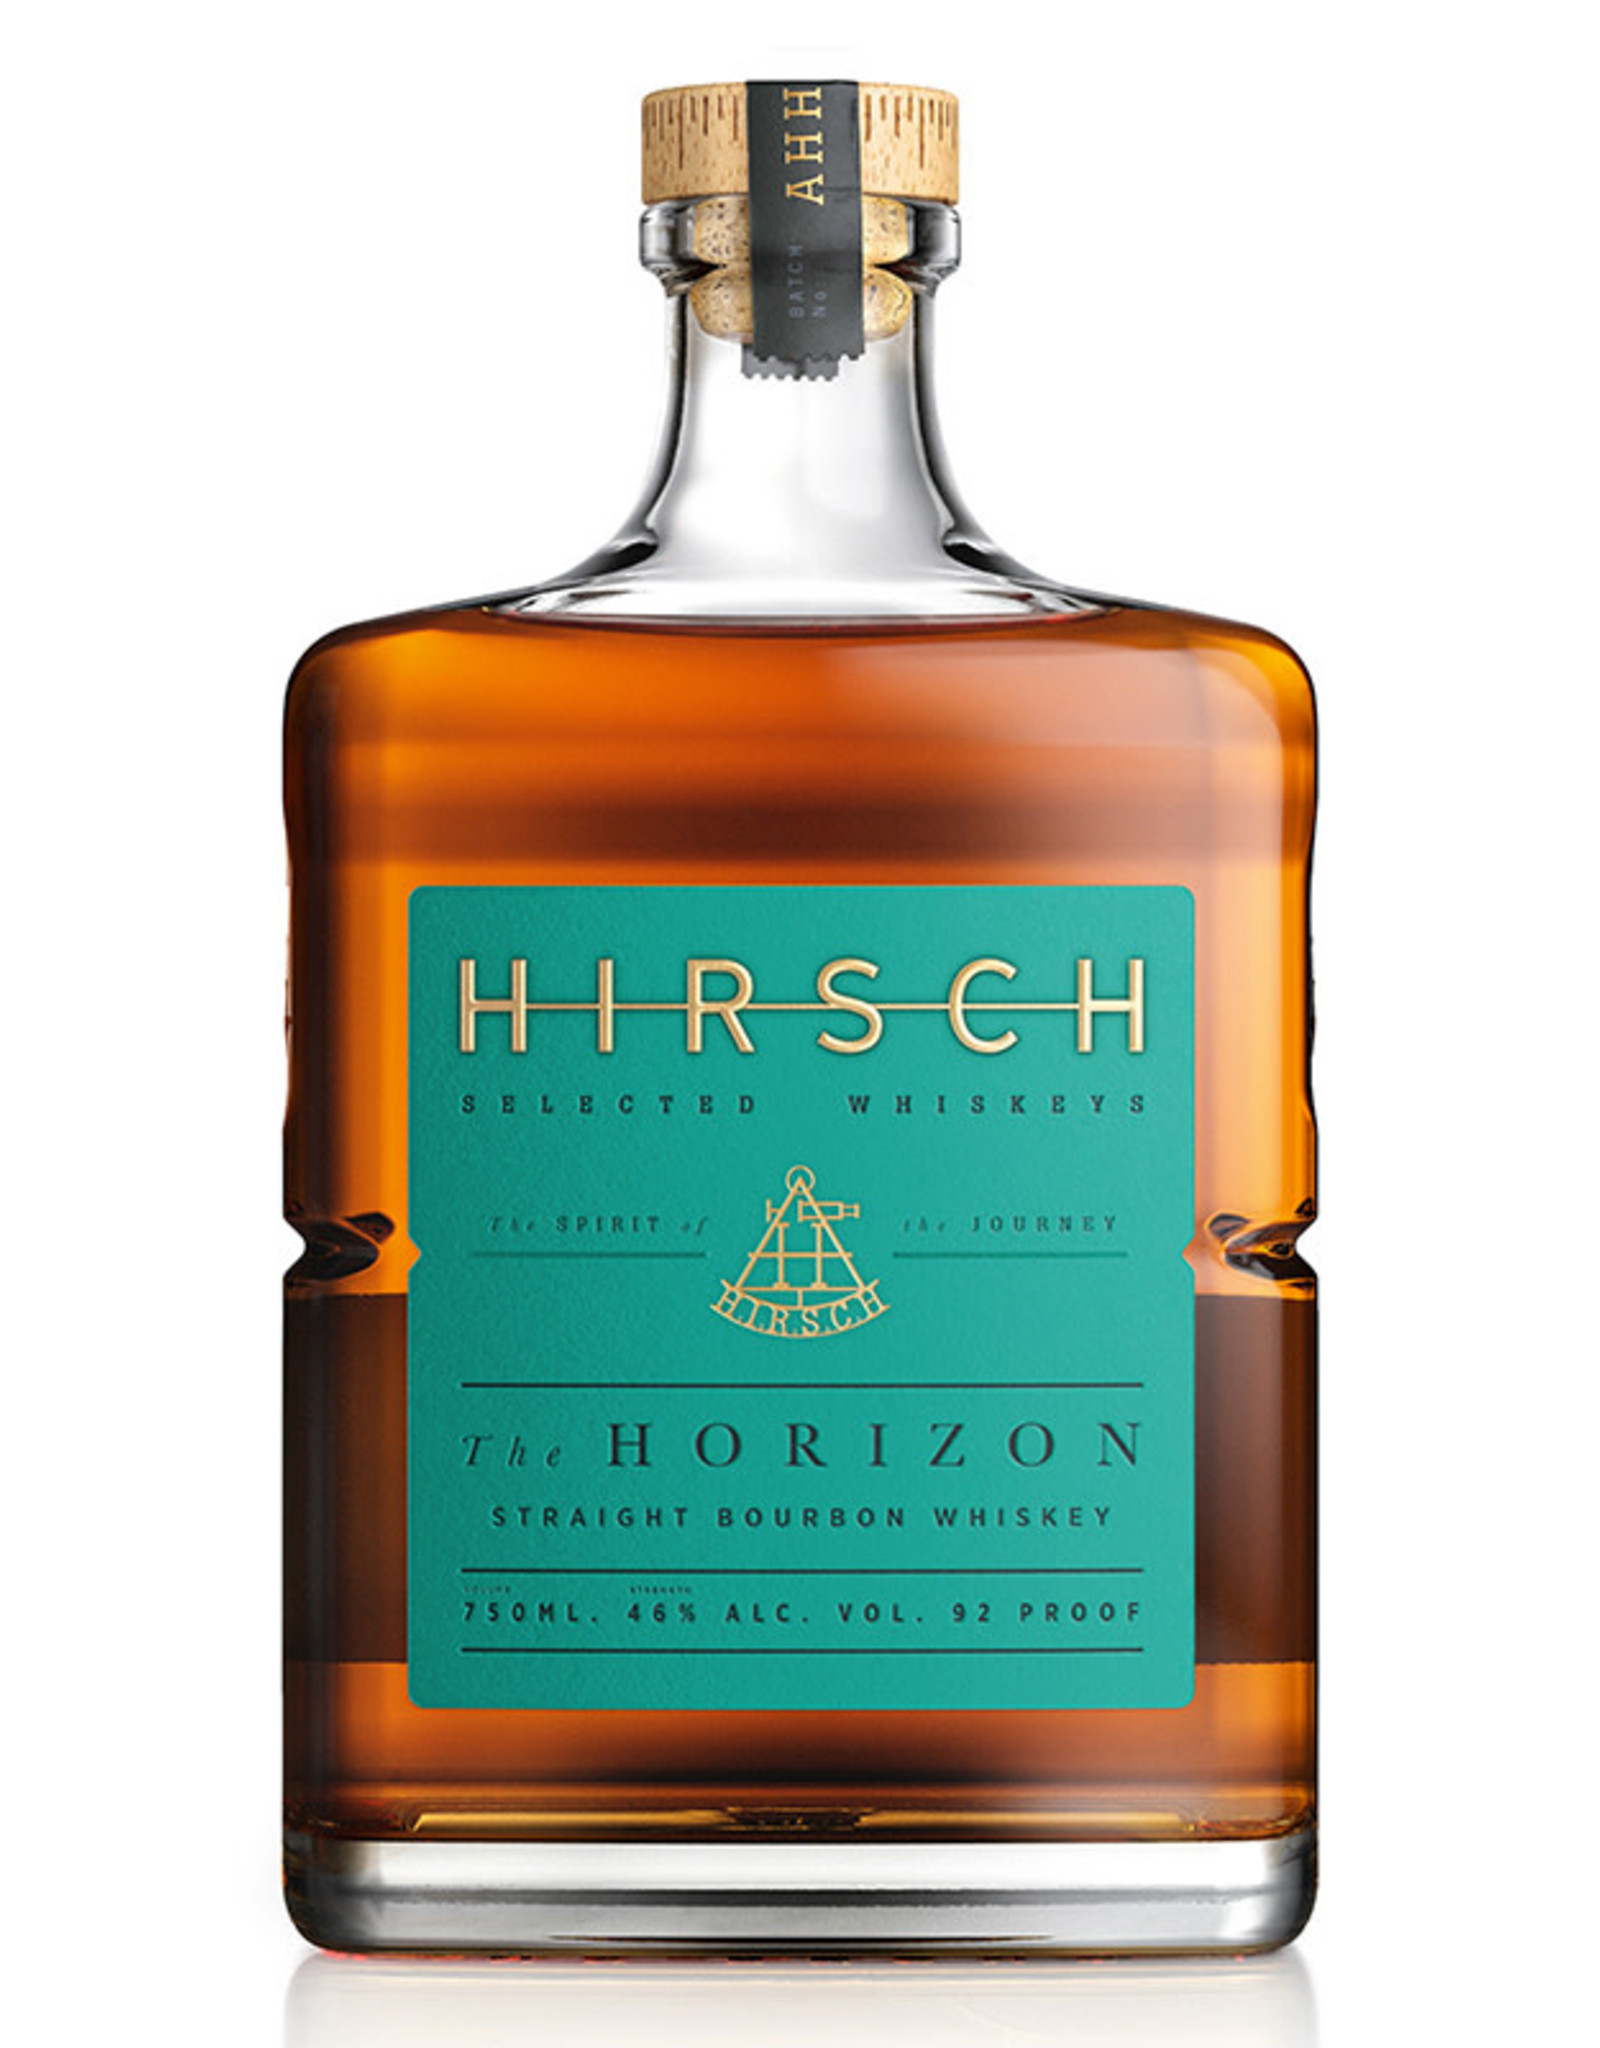 USA Hirsch The horizon Straight Bourbon Whiskey